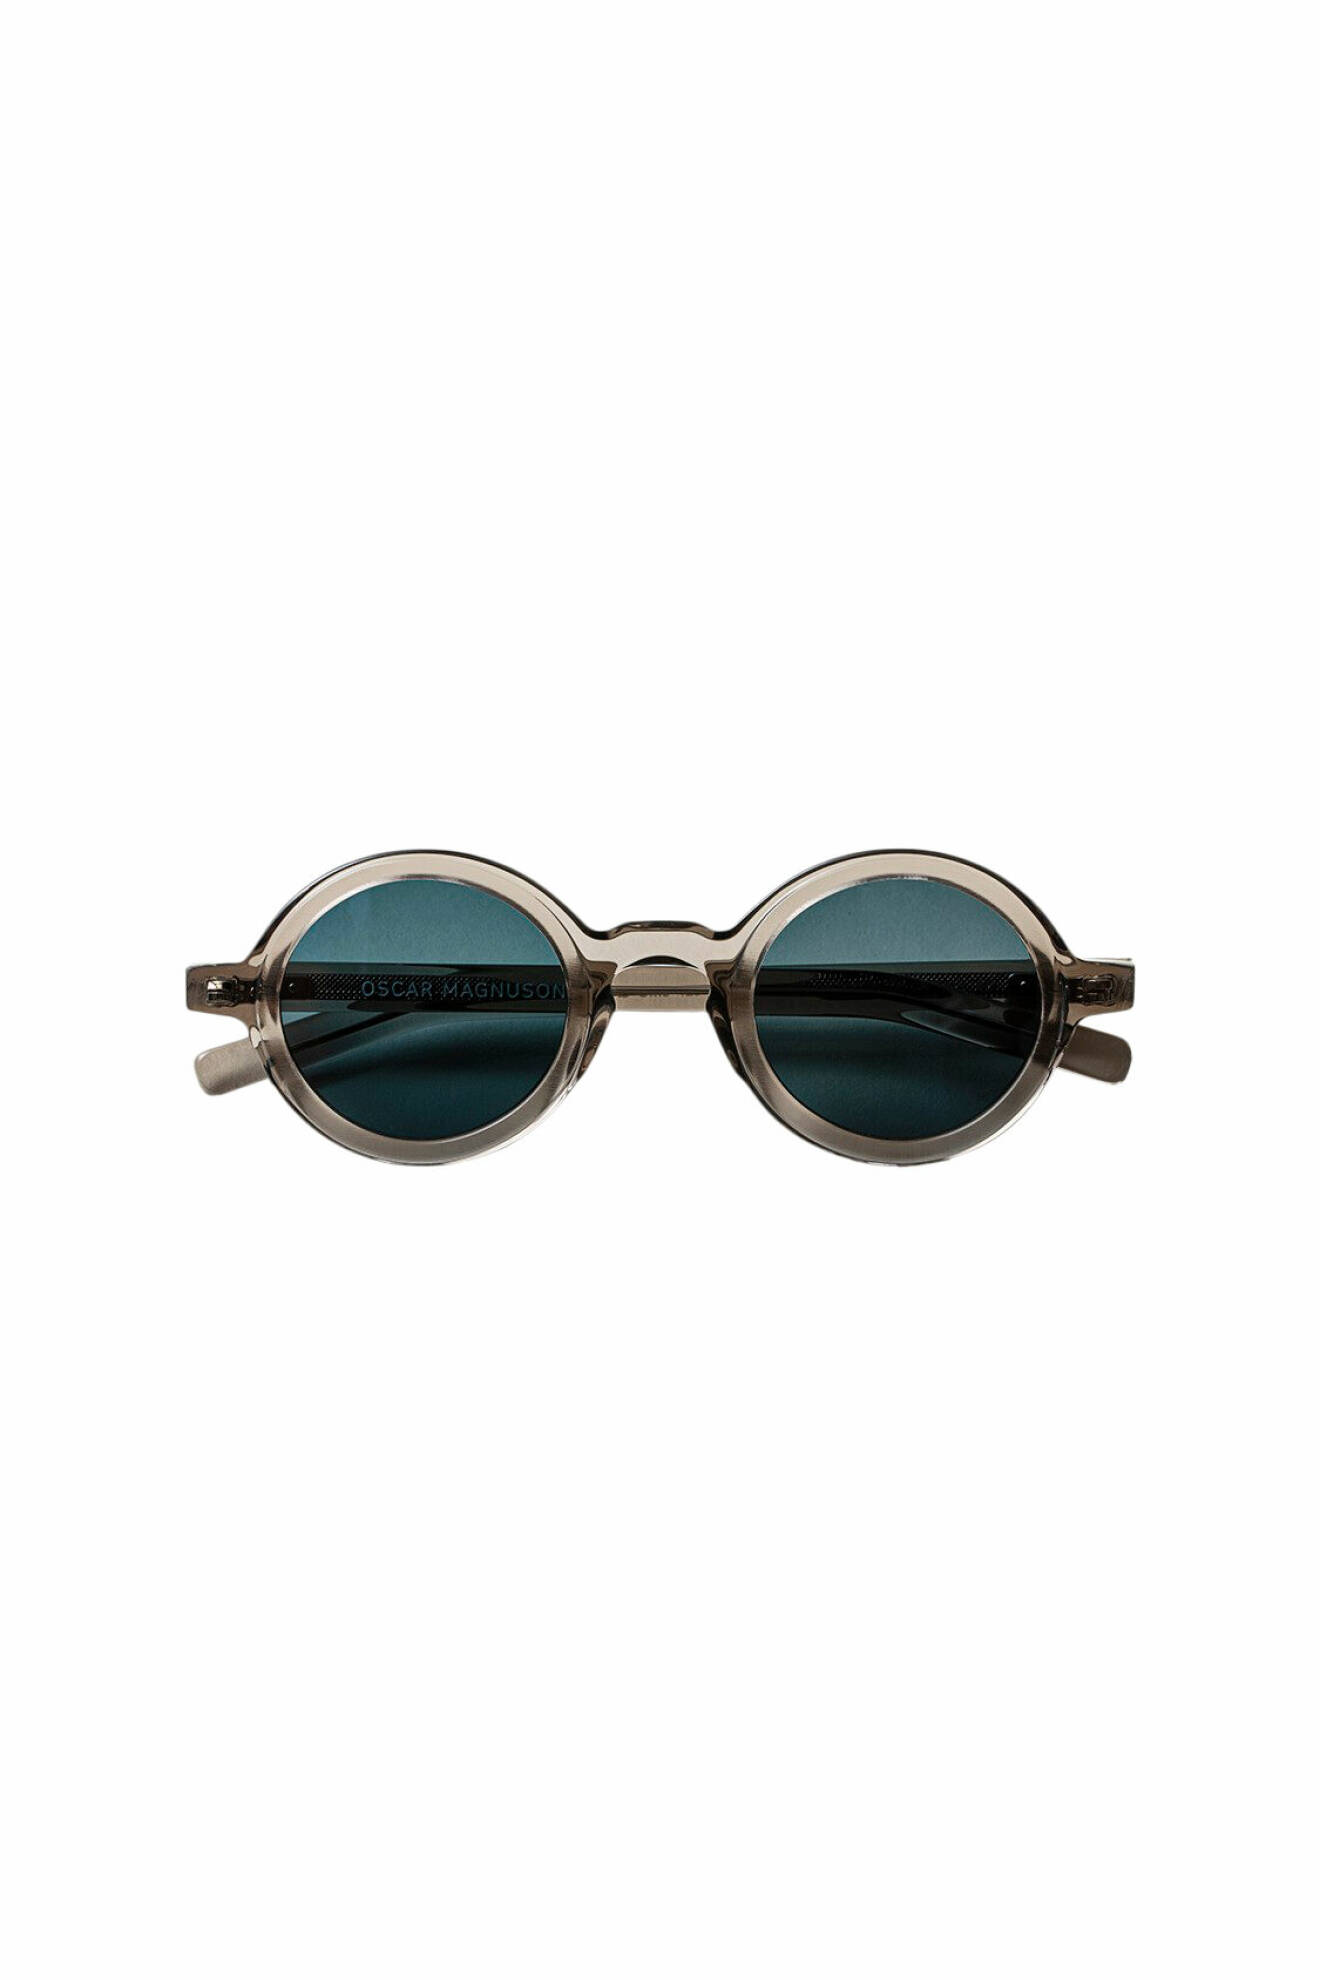 Trendiga solglasögon från Oscar Magnuson.